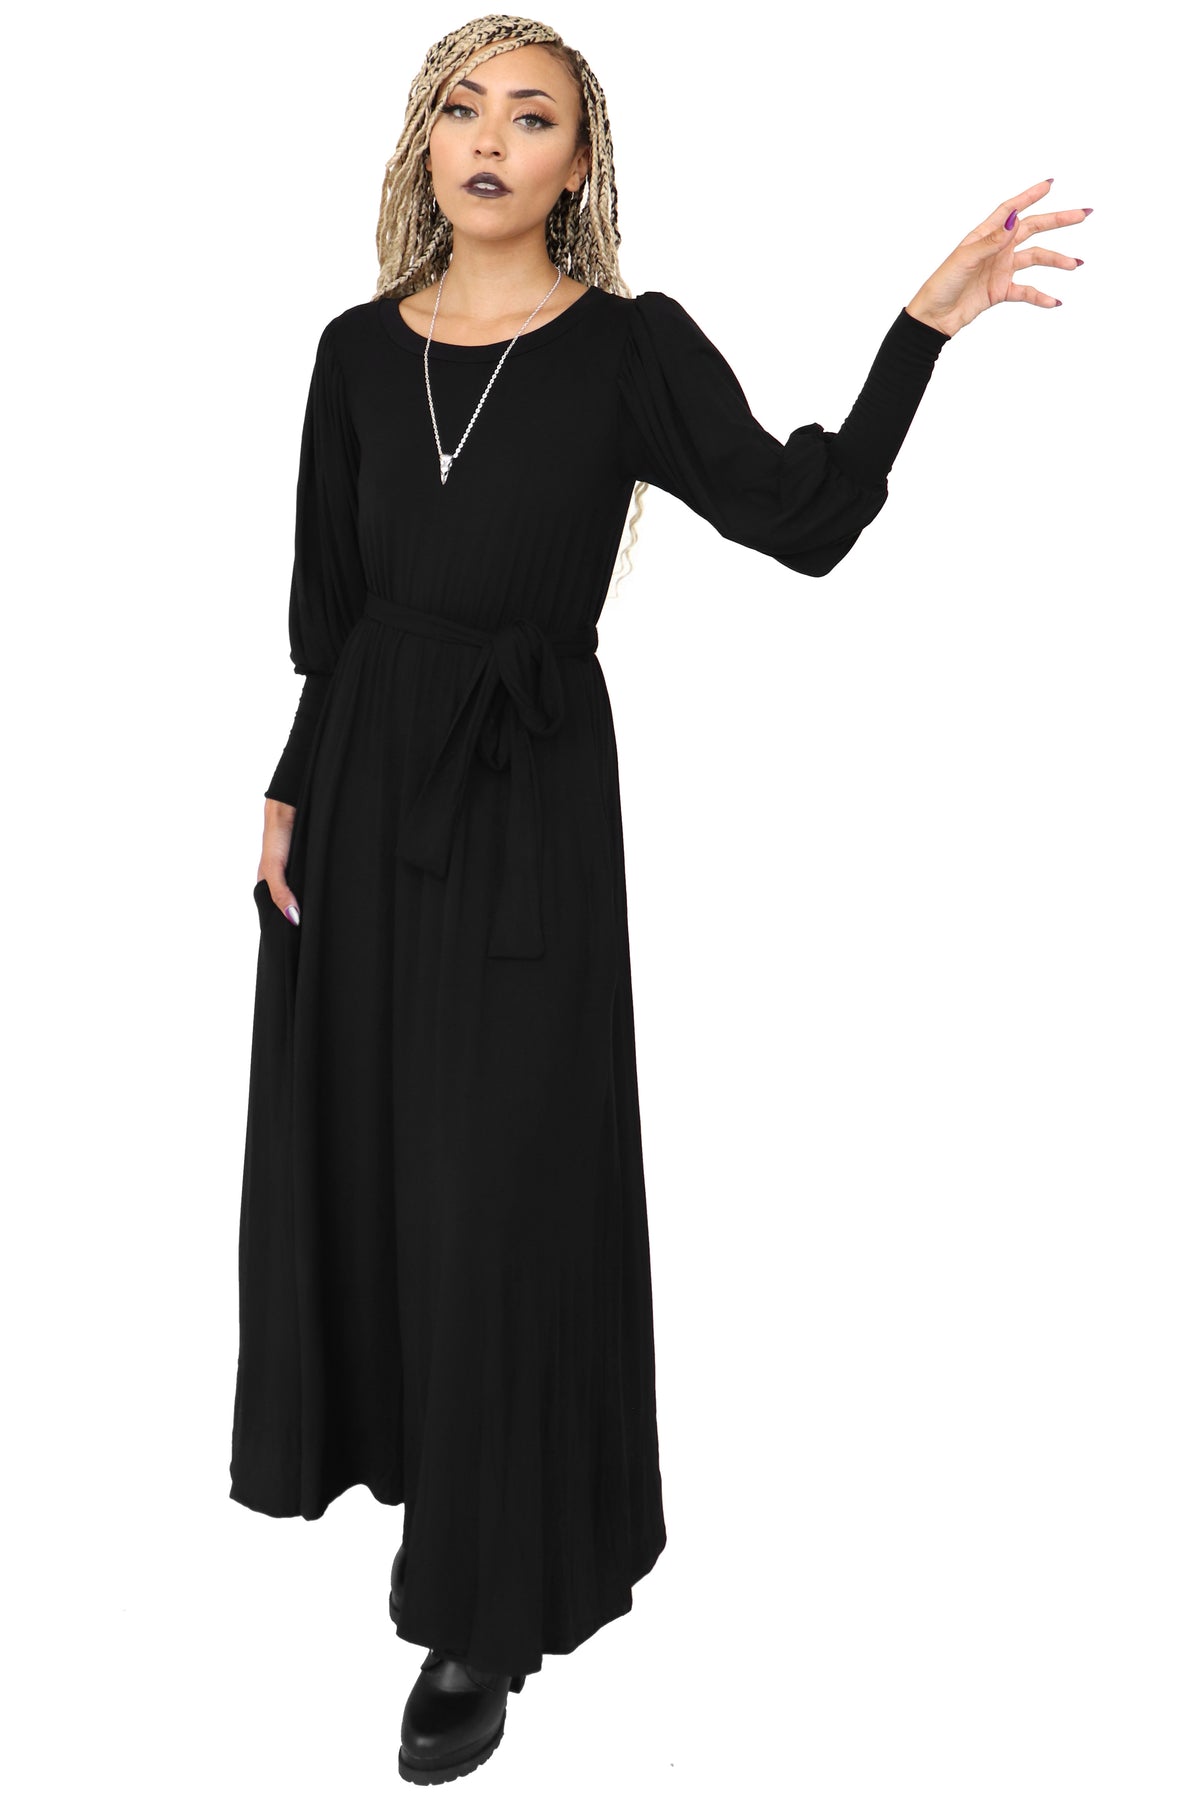 Black long sleeve floor length dress. 